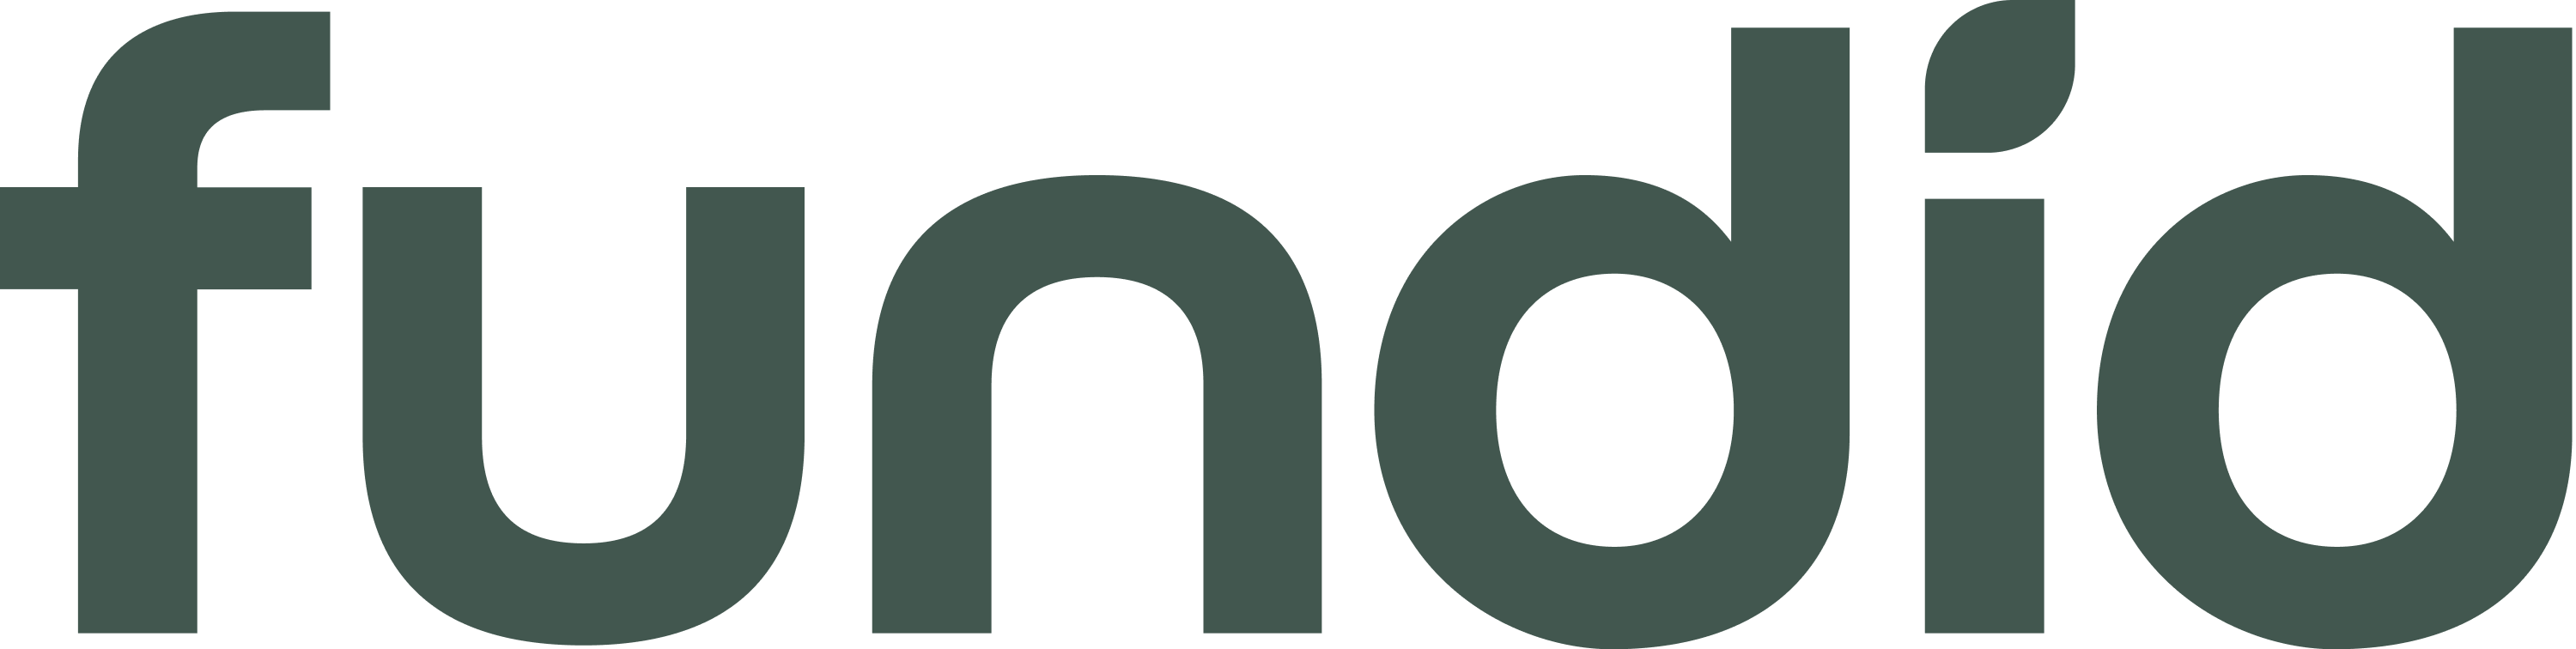 Fundid - Logo - Green-1-1